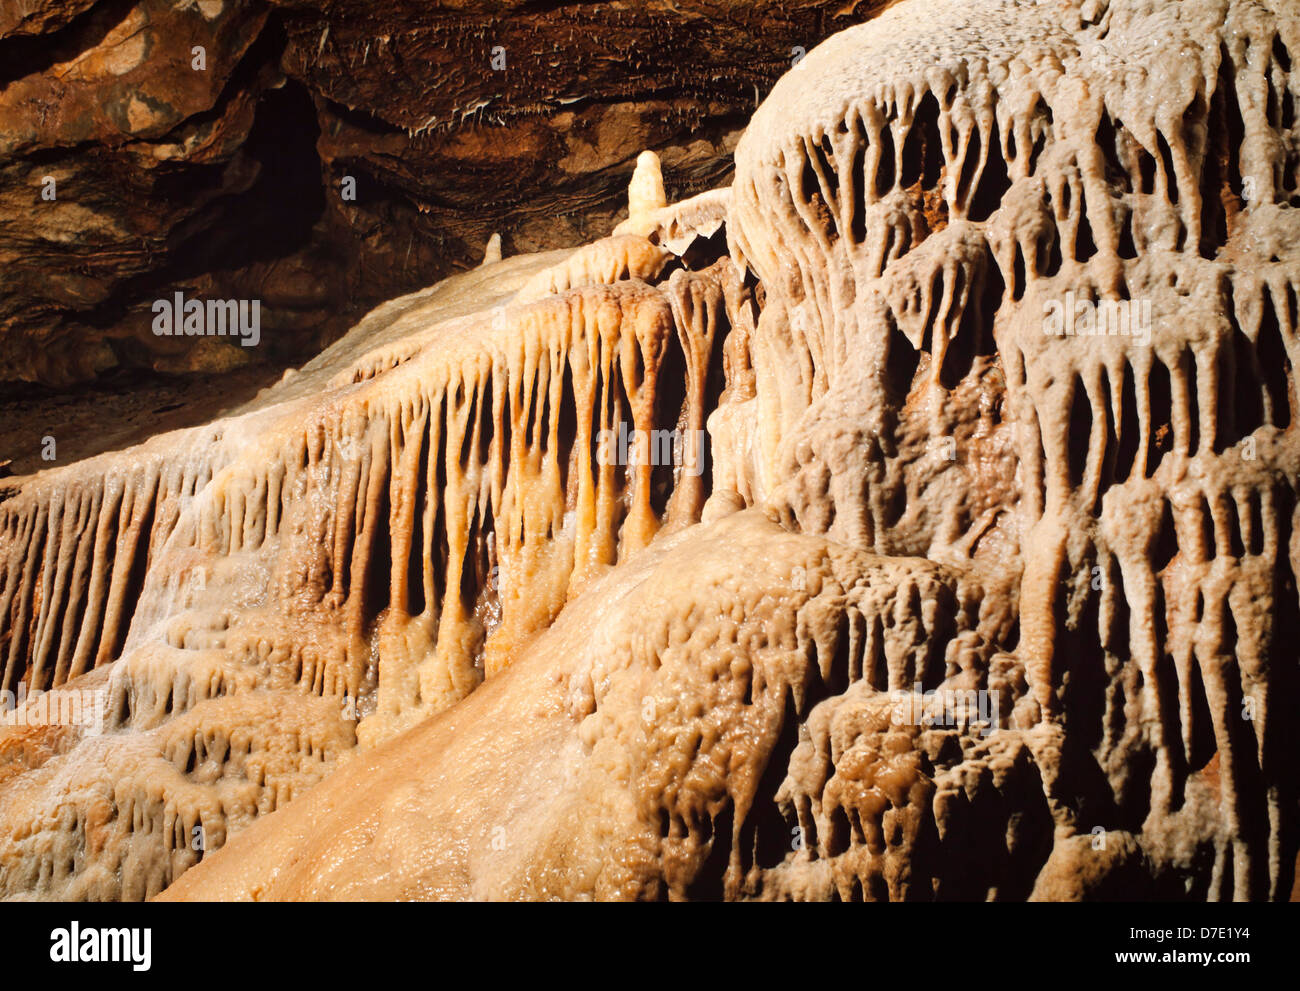 Gough's Cavern, Cheddar, UK. Limestone formations Stock Photo